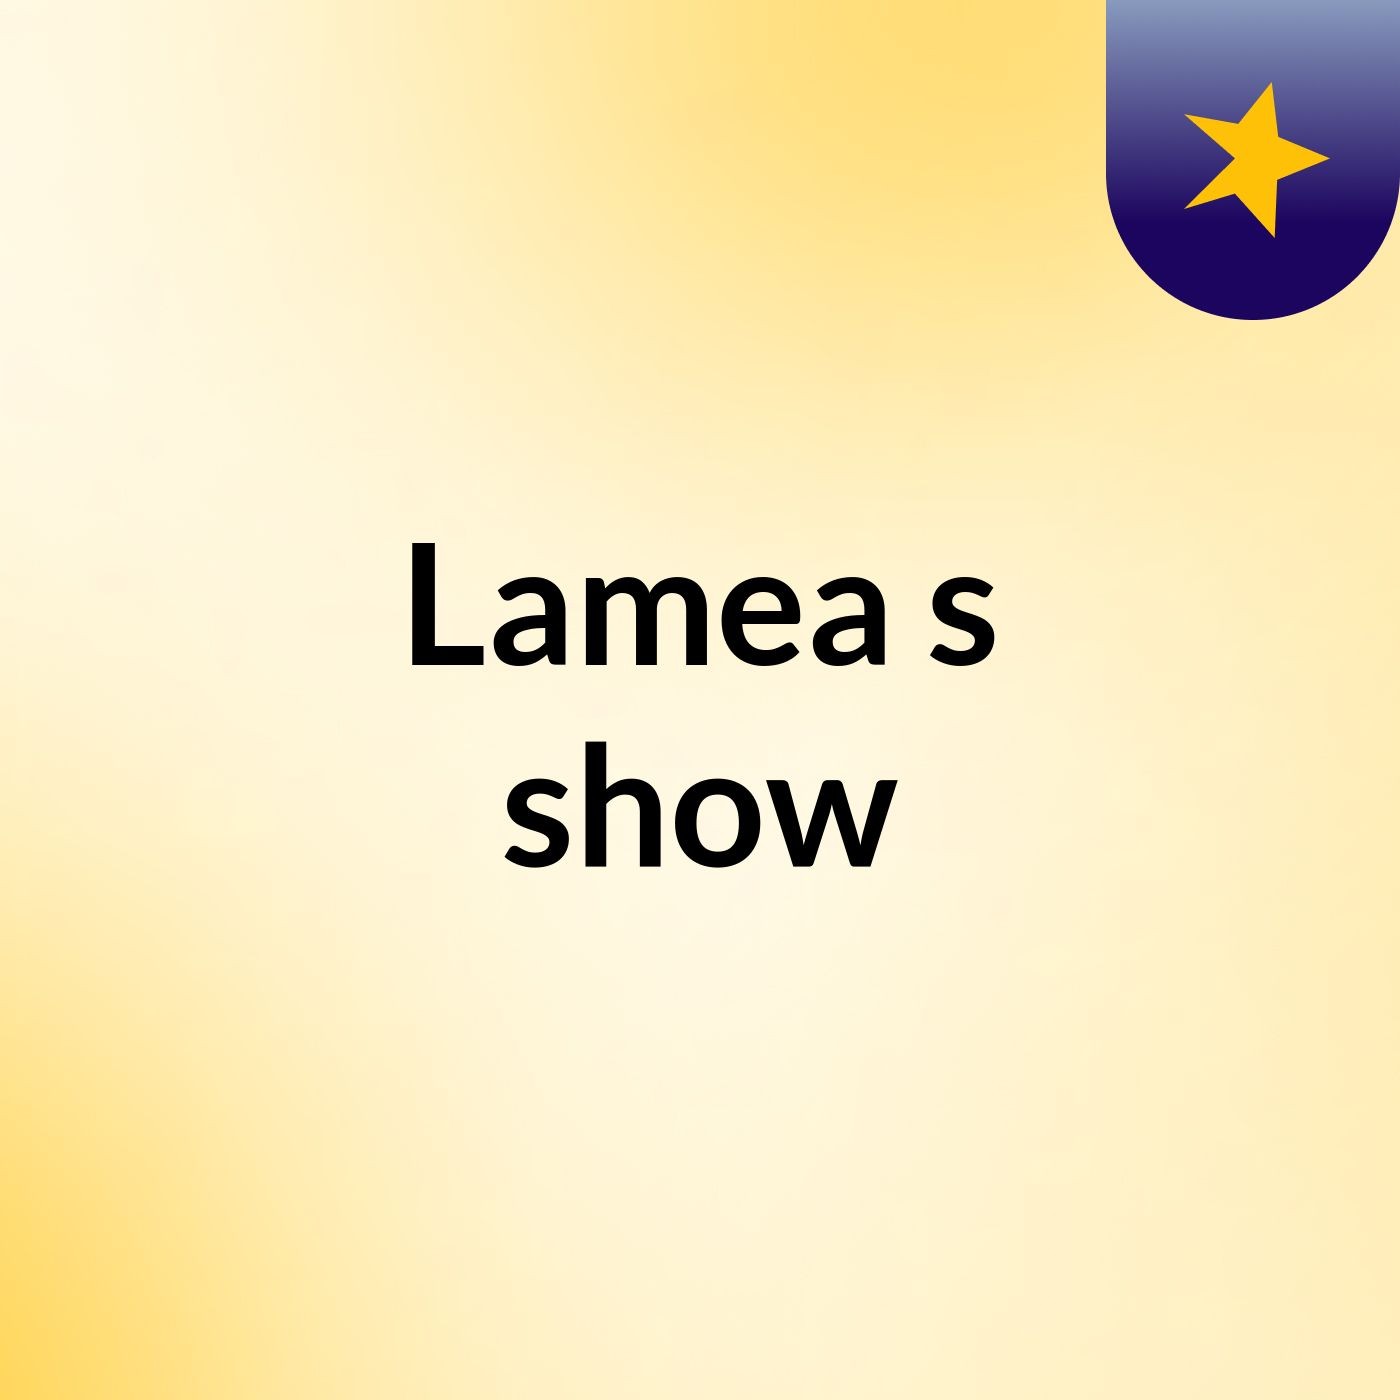 Lamea's show